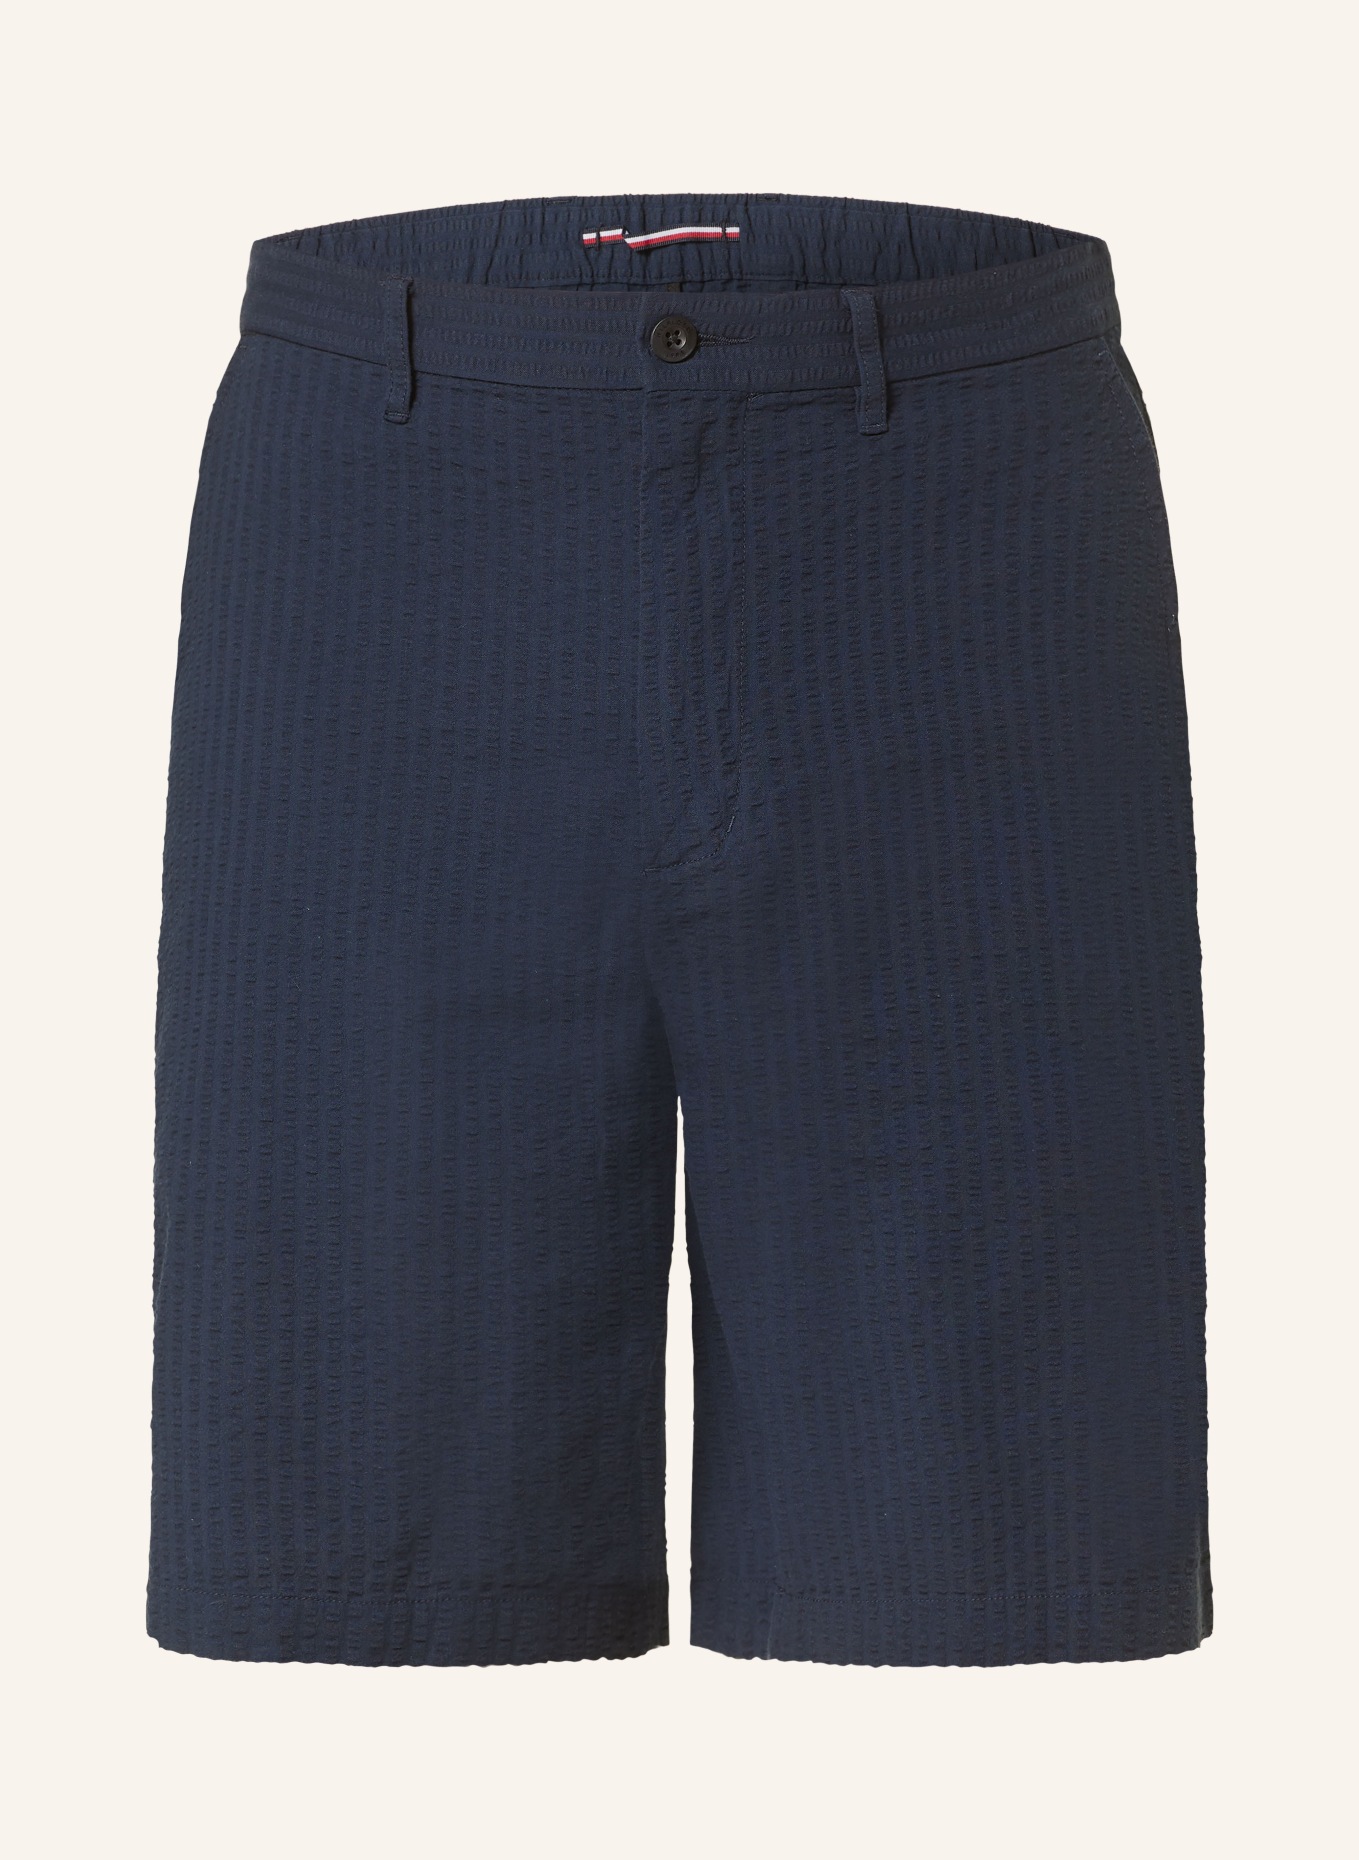 TOMMY HILFIGER Shorts, Farbe: DUNKELBLAU (Bild 1)